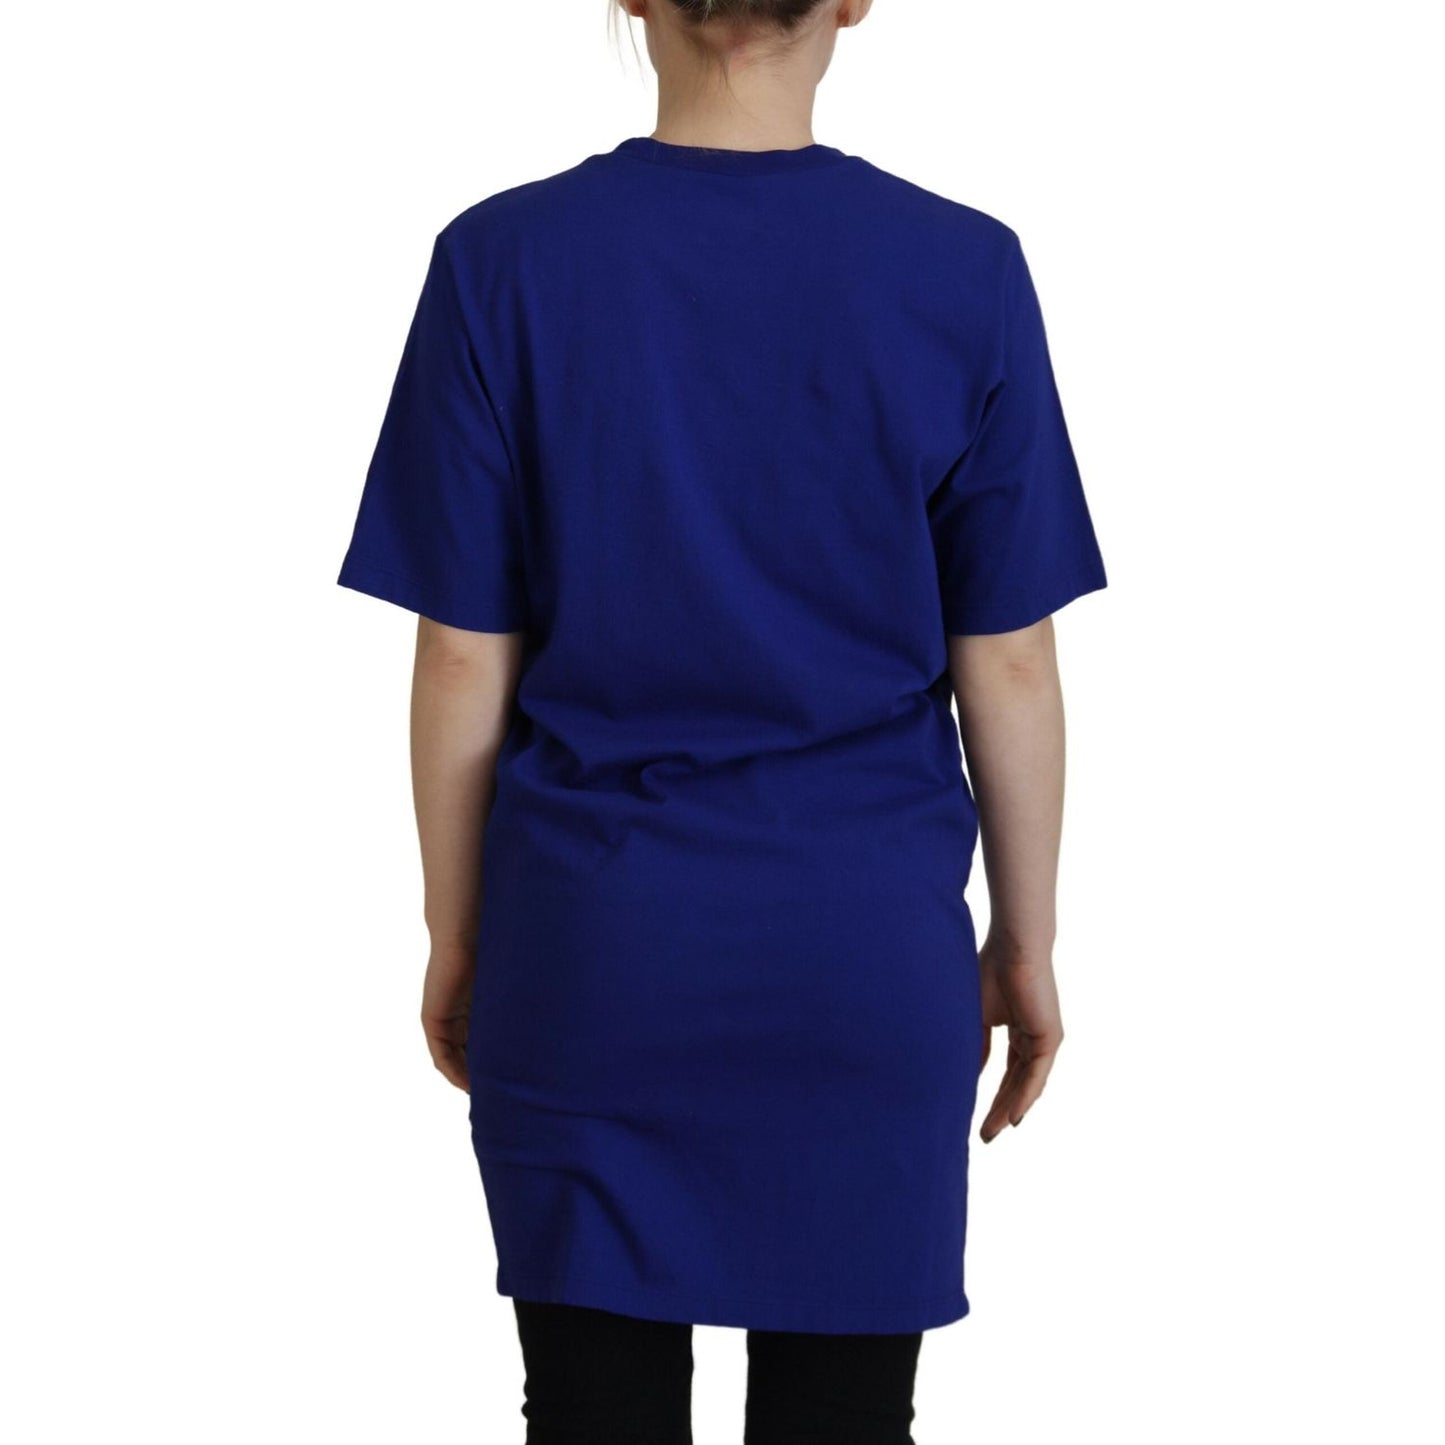 Dsquared² Blue Logo Cotton Crewneck Short Sleeve Tee T-shirt blue-logo-cotton-crewneck-short-sleeve-tee-t-shirt